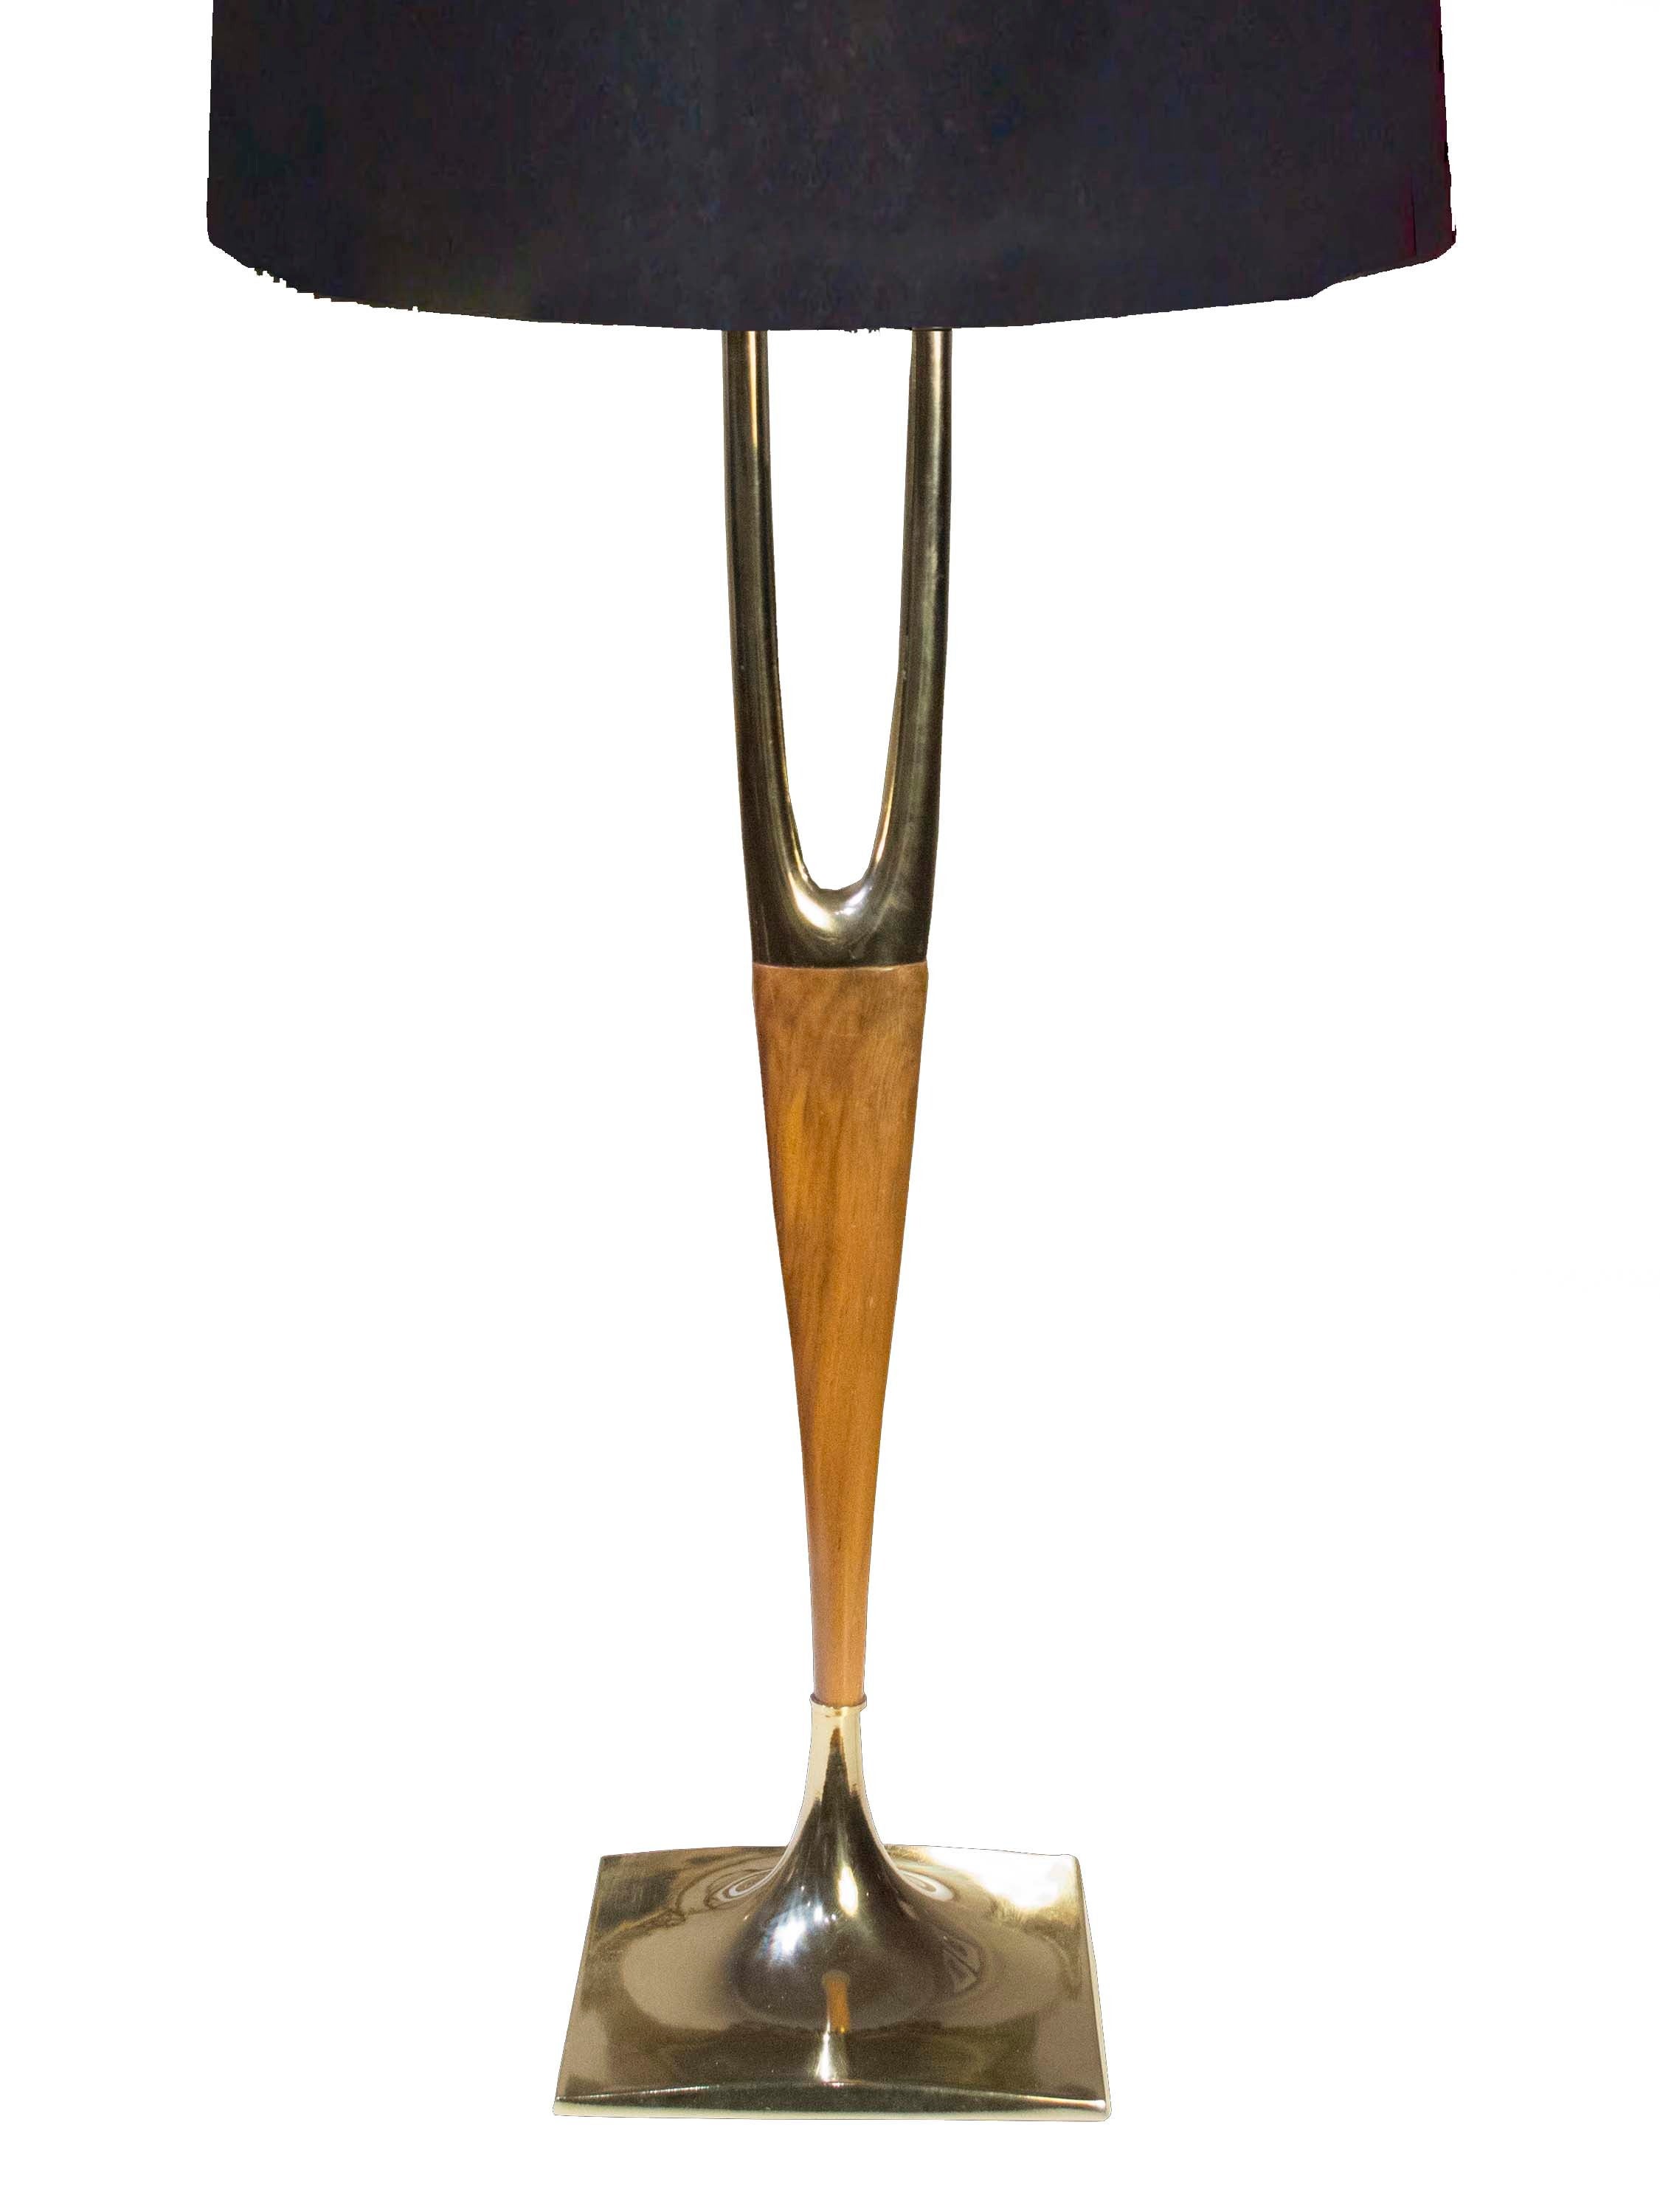 Gerald Thurston designed "Wishbone" Lamp by Laurel Lamp Company